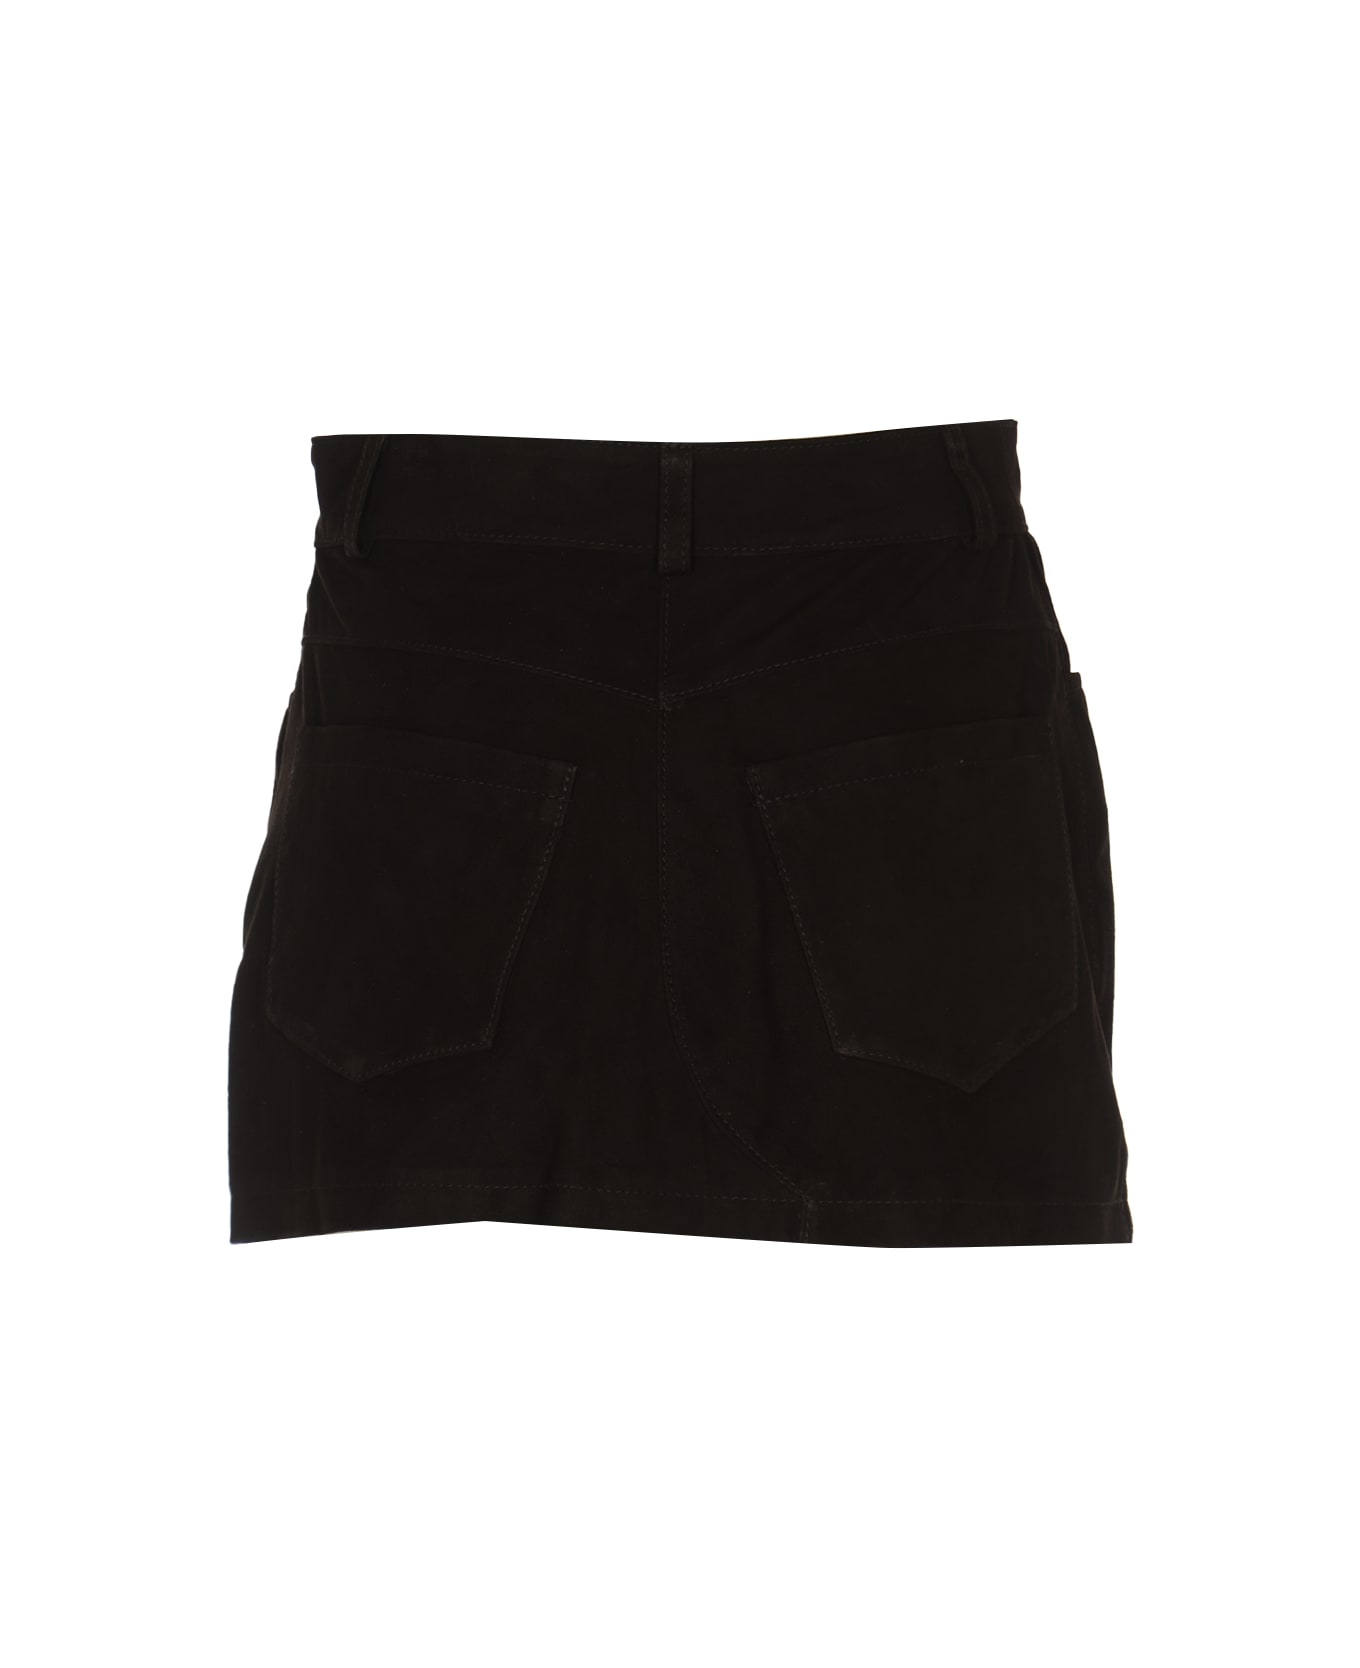 DFour 5 Pockets Short Skirt - Black